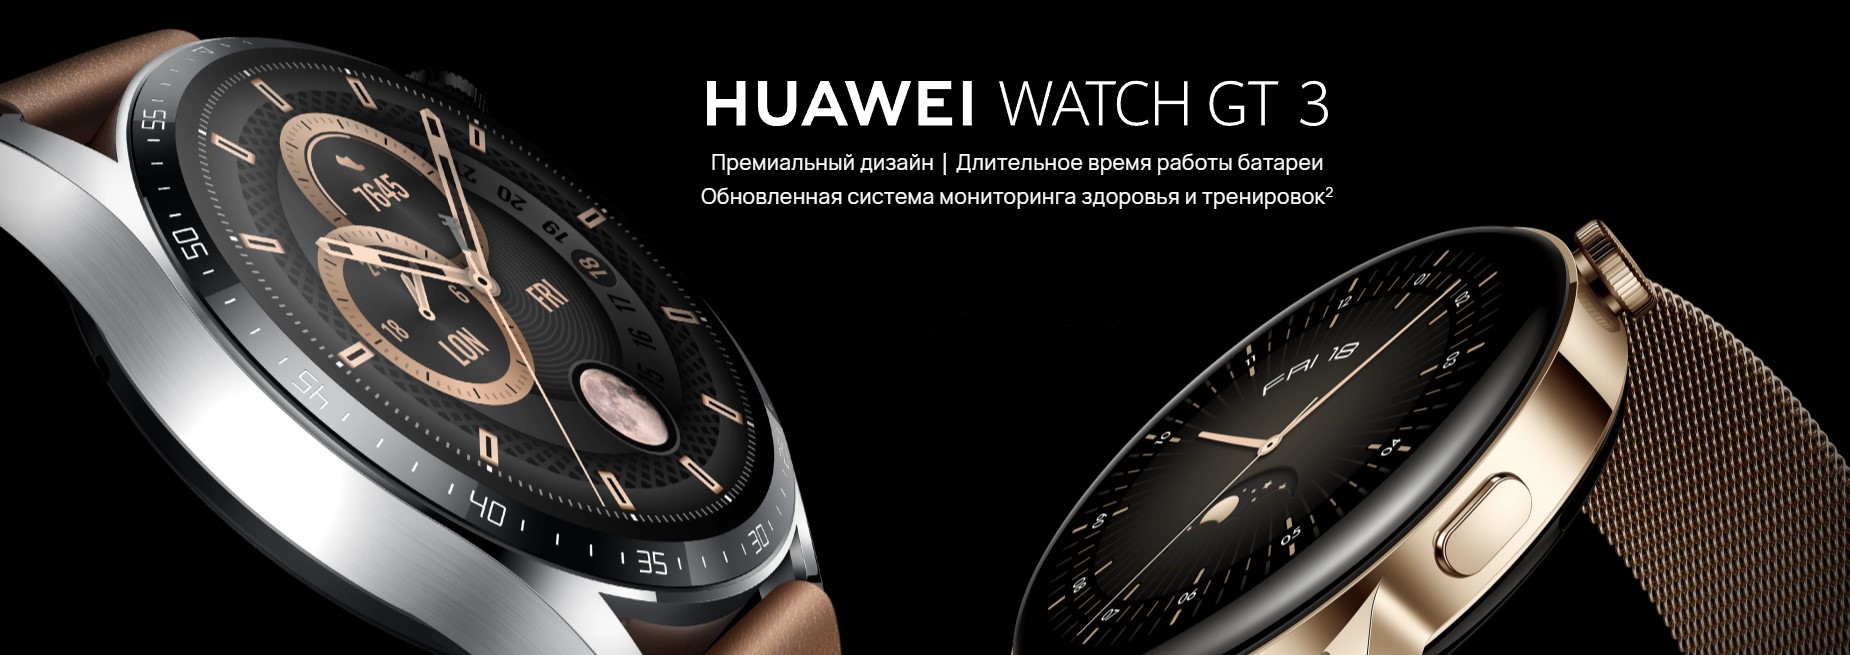 Смарт часы huawei gt 3 jpt. Смарт-часы Huawei gt 3 JPT-b29. Huawei watch gt 3 Elite. Смарт-часы Huawei gt 3 mil-b19 Black SS / Black Fluoroelastomer. Huawei watch gt3 Jupiter.